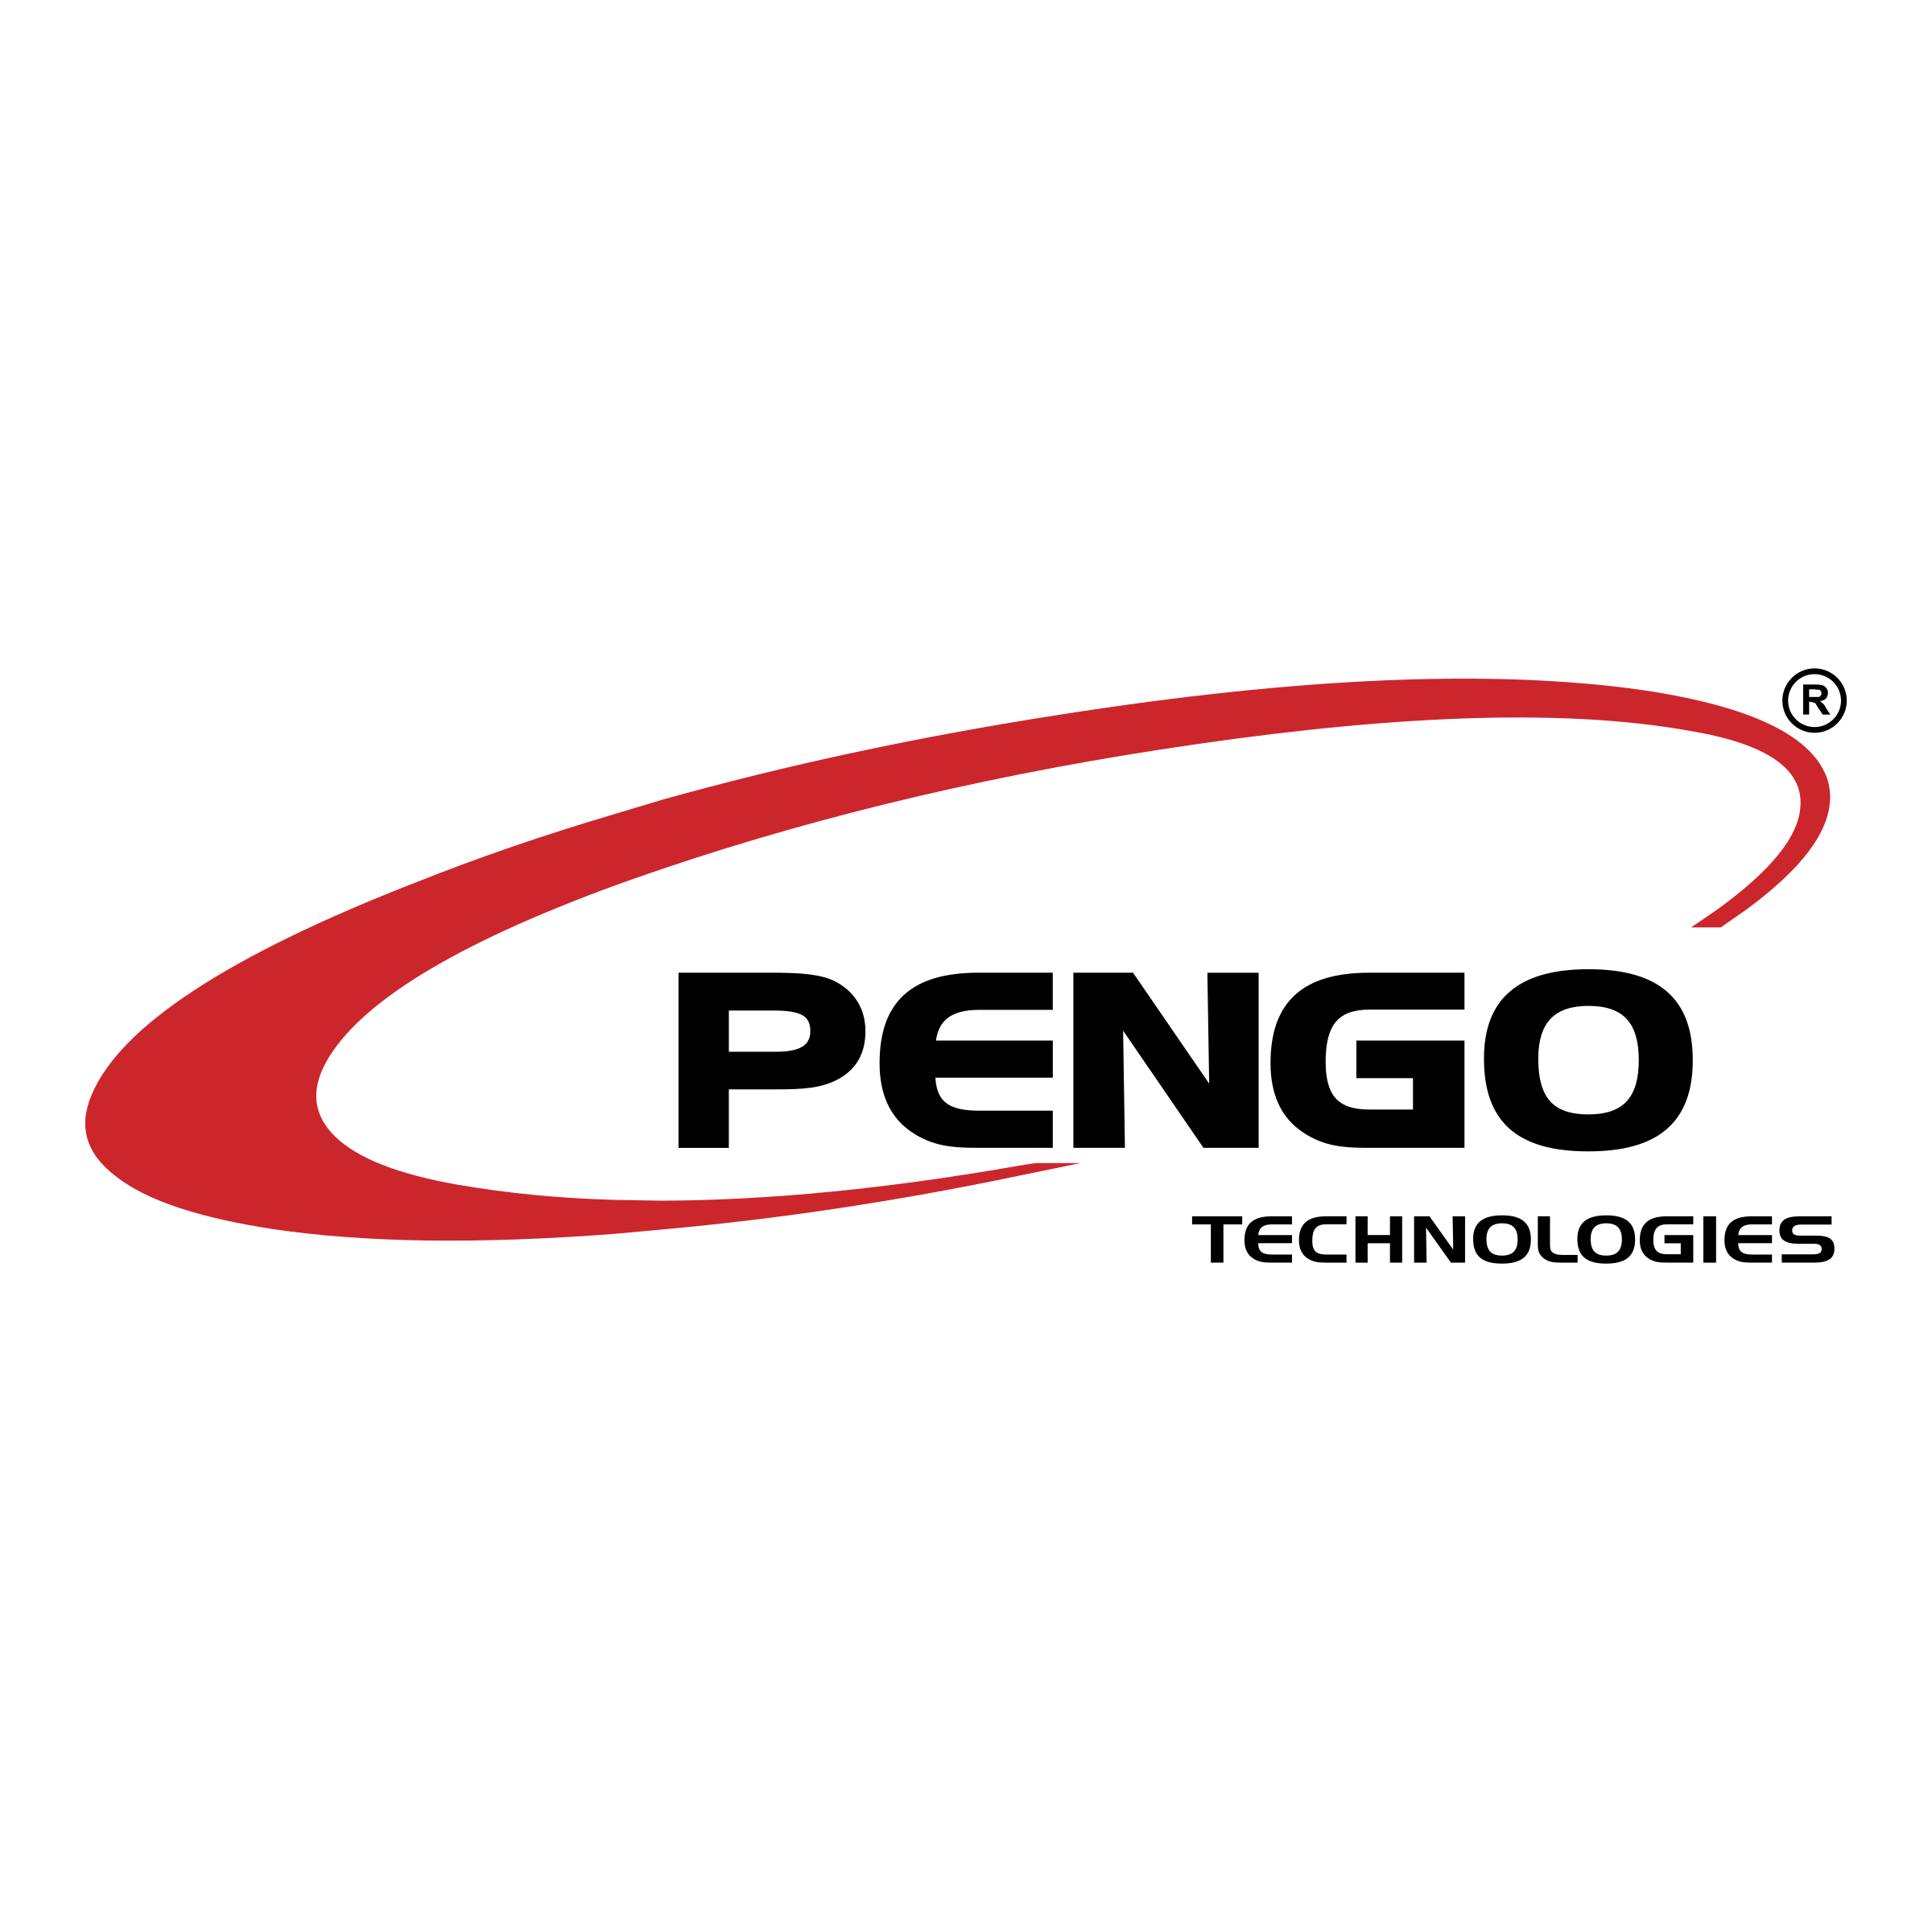 Pengo Logo - Pengo Technologies Logo PNG Transparent & SVG Vector